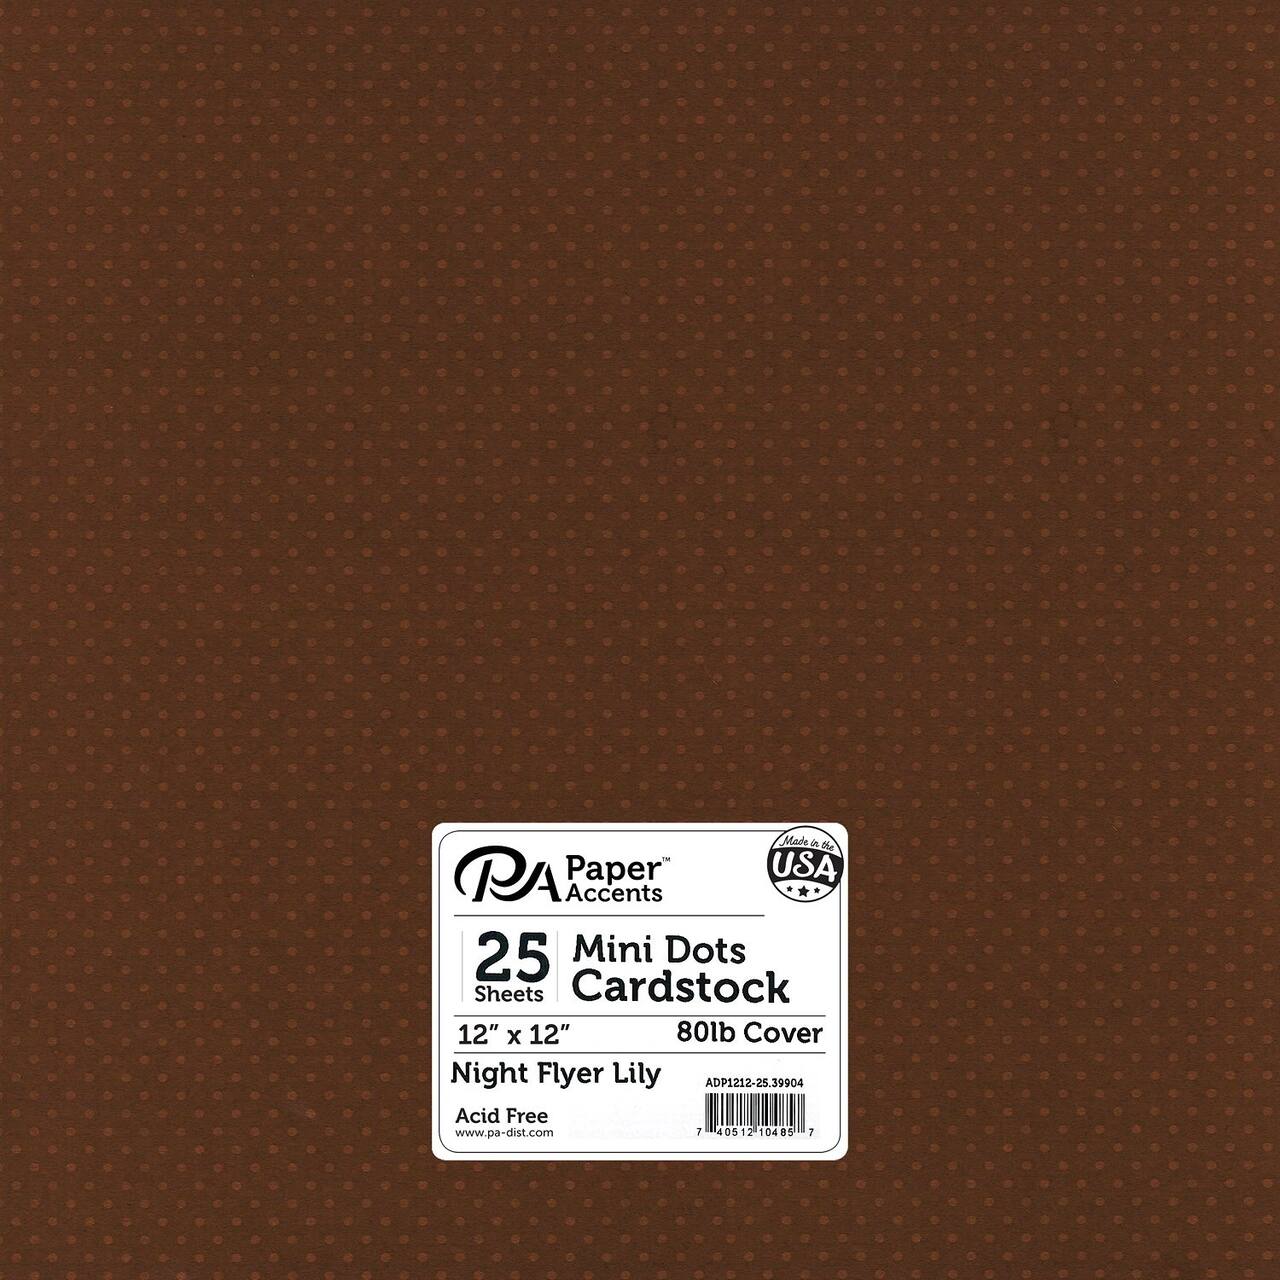 PA Paper™ Accents 12 x 12 80lb. Mini Dot Cardstock, 25 Sheets